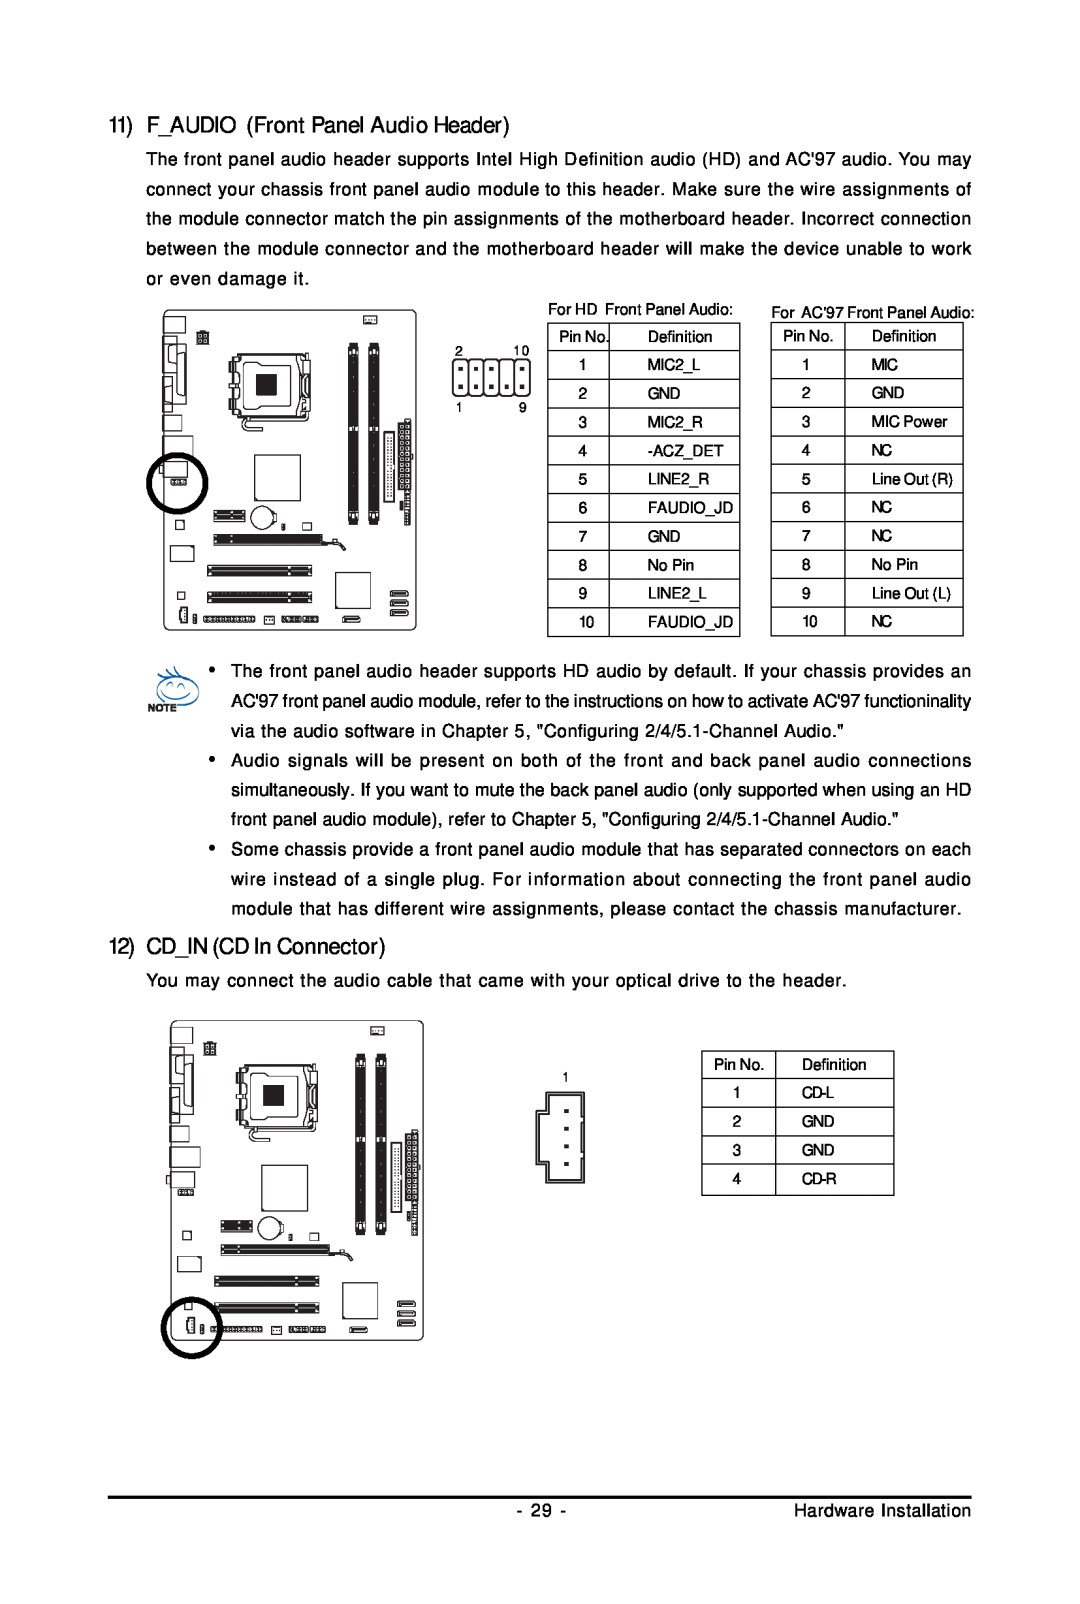 Intel GA-G31M-S2C, GA-G31M-S2L user manual 11F_AUDIO Front Panel Audio Header, 12CD_IN CD In Connector 